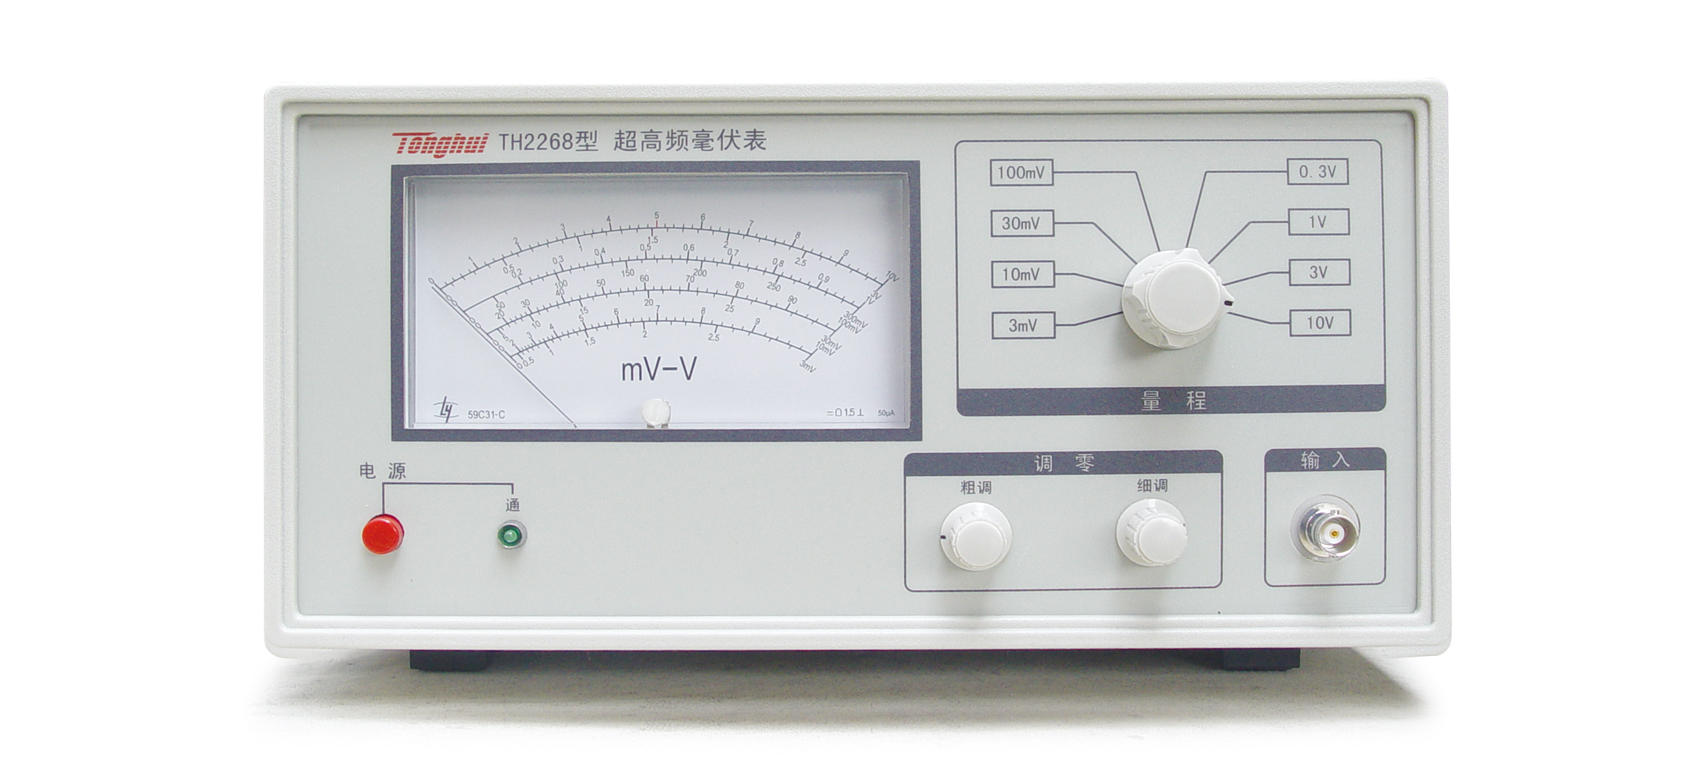 TH2268 超高频数字毫伏表